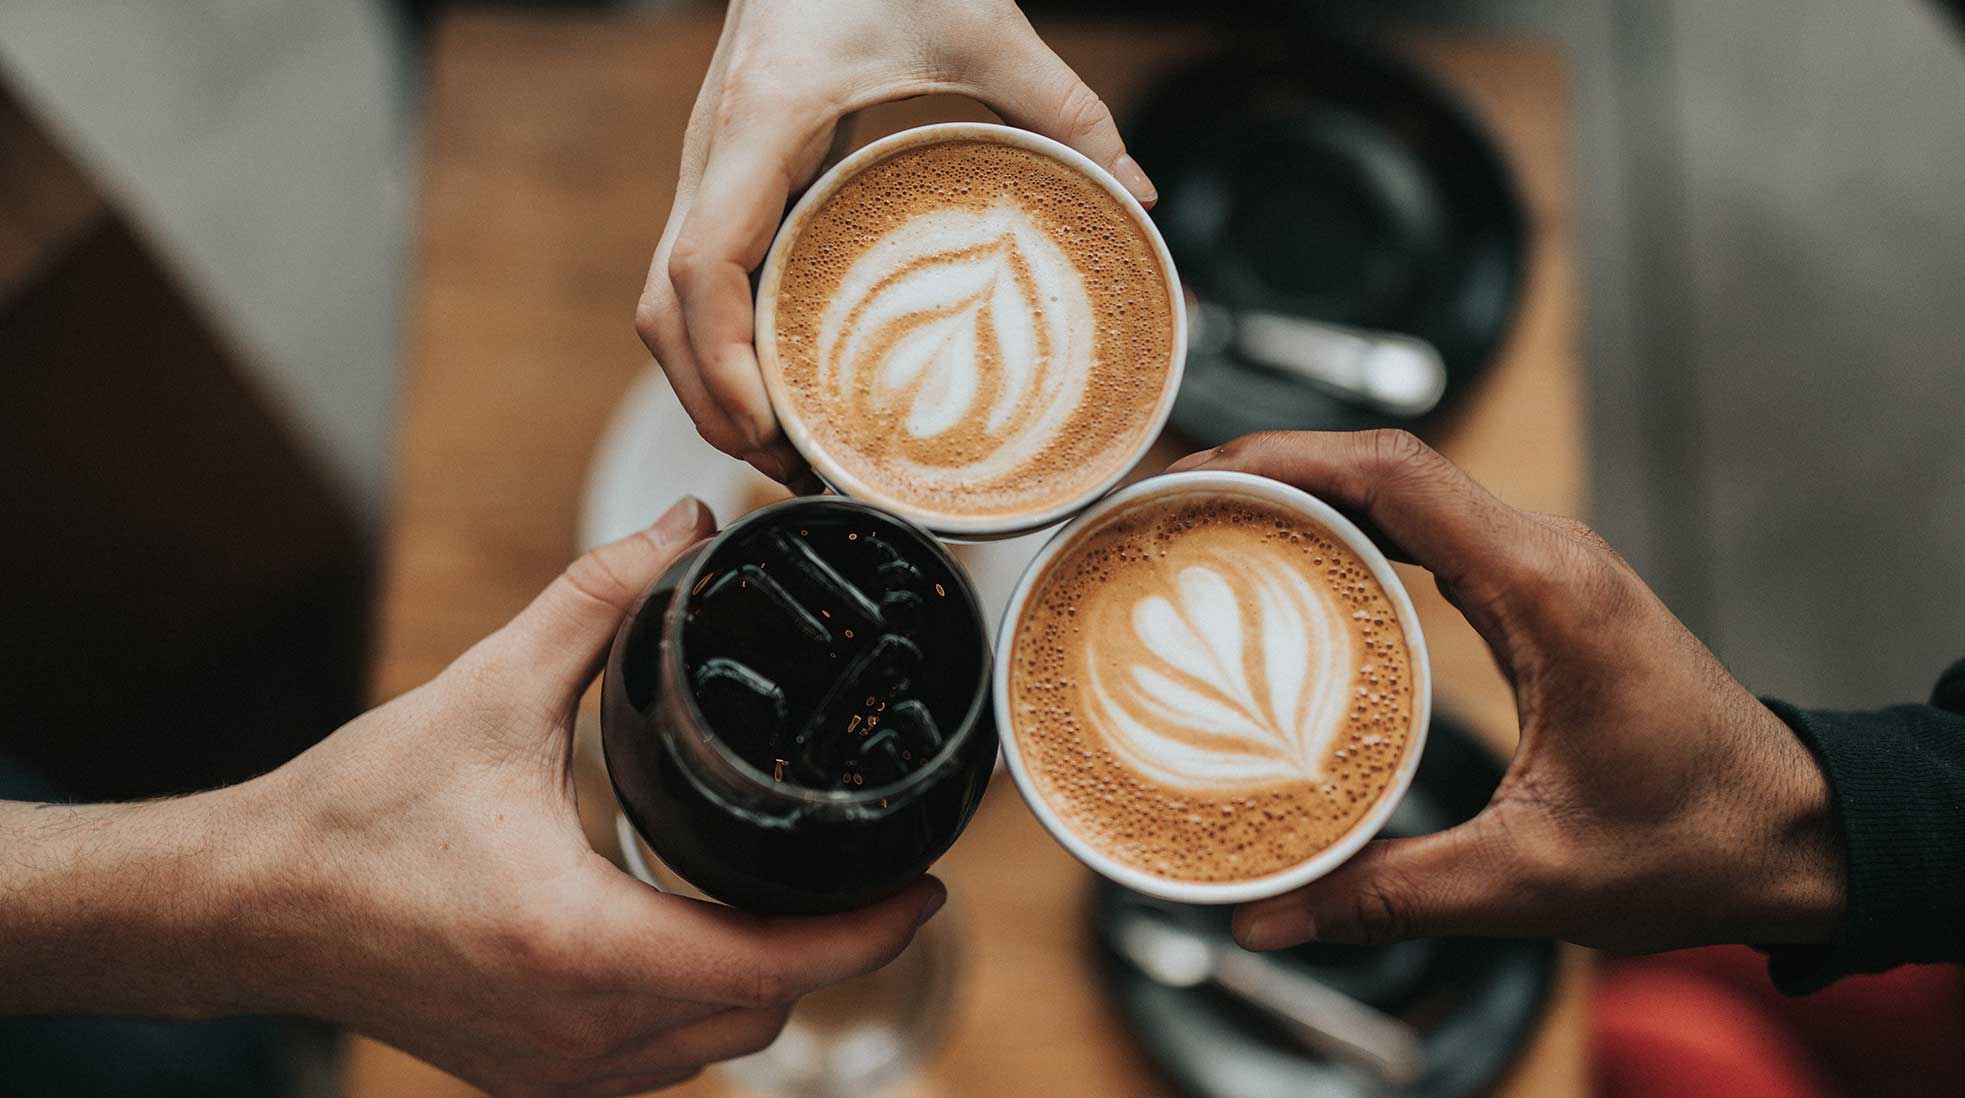 Is coffee good or bad for you? Photo: Nathan Dumlao / Unsplash